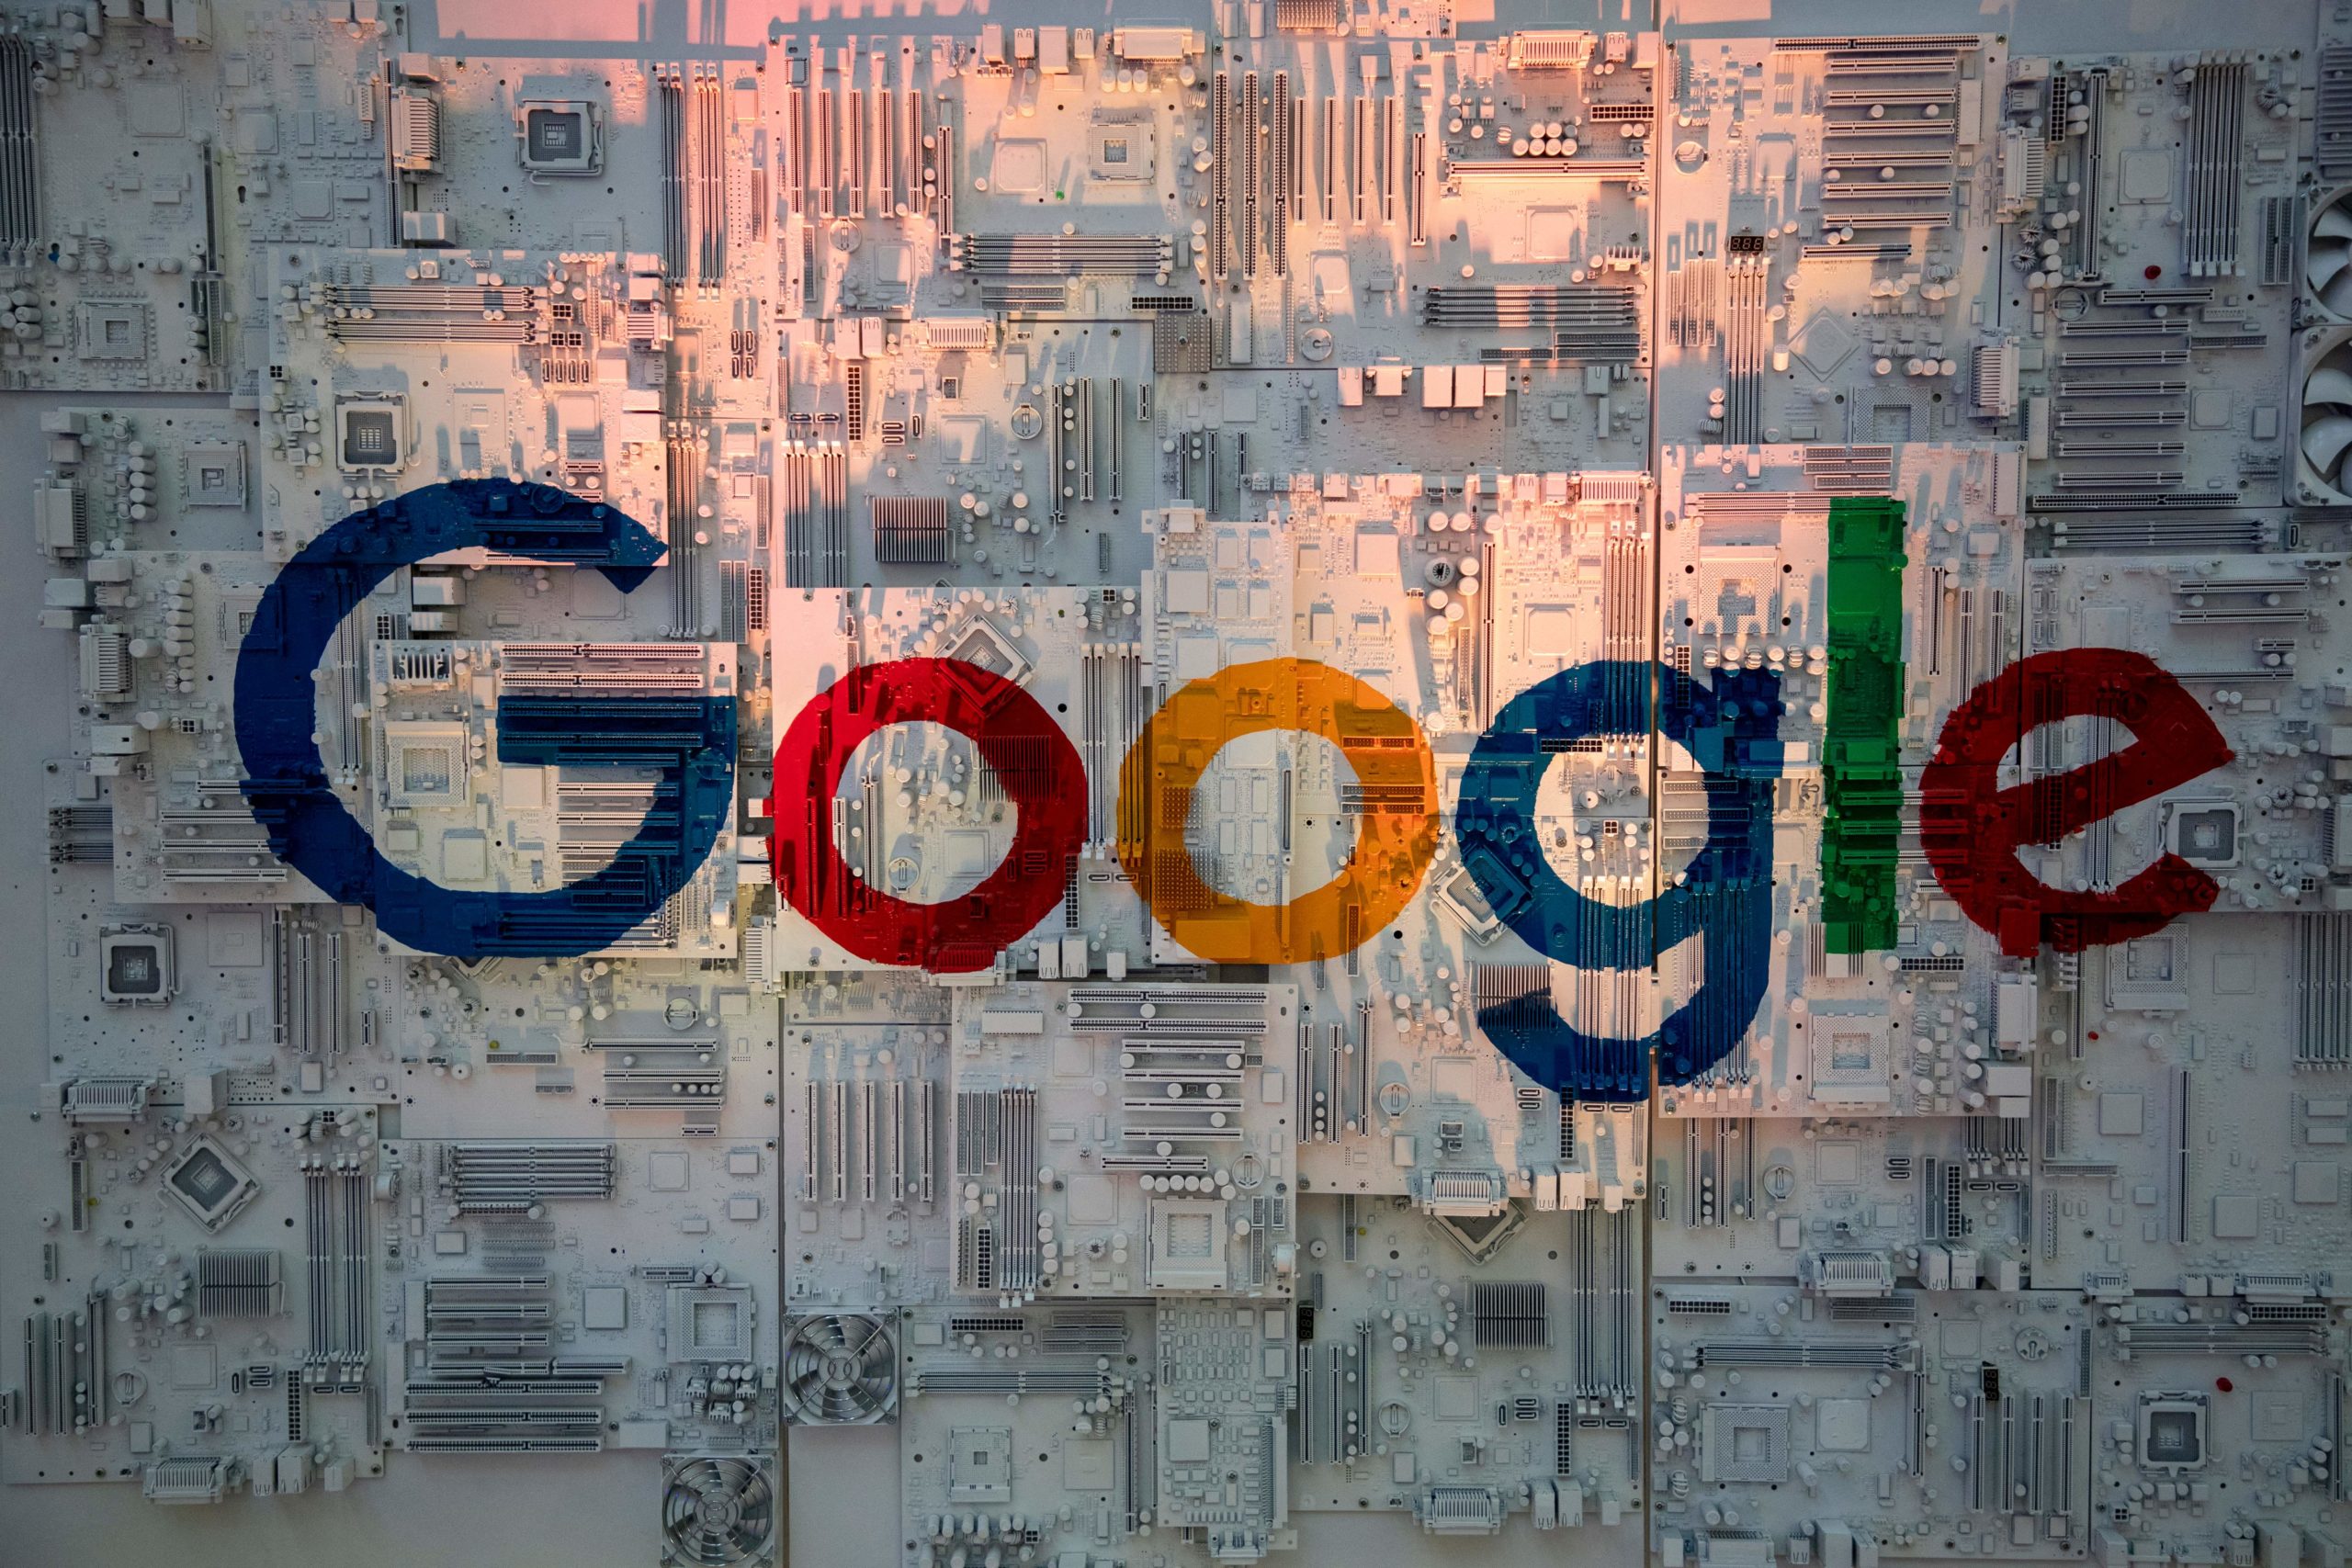 Porn, Piracy, Fraud: What Lurks Inside Google's Black Box Ad Empire